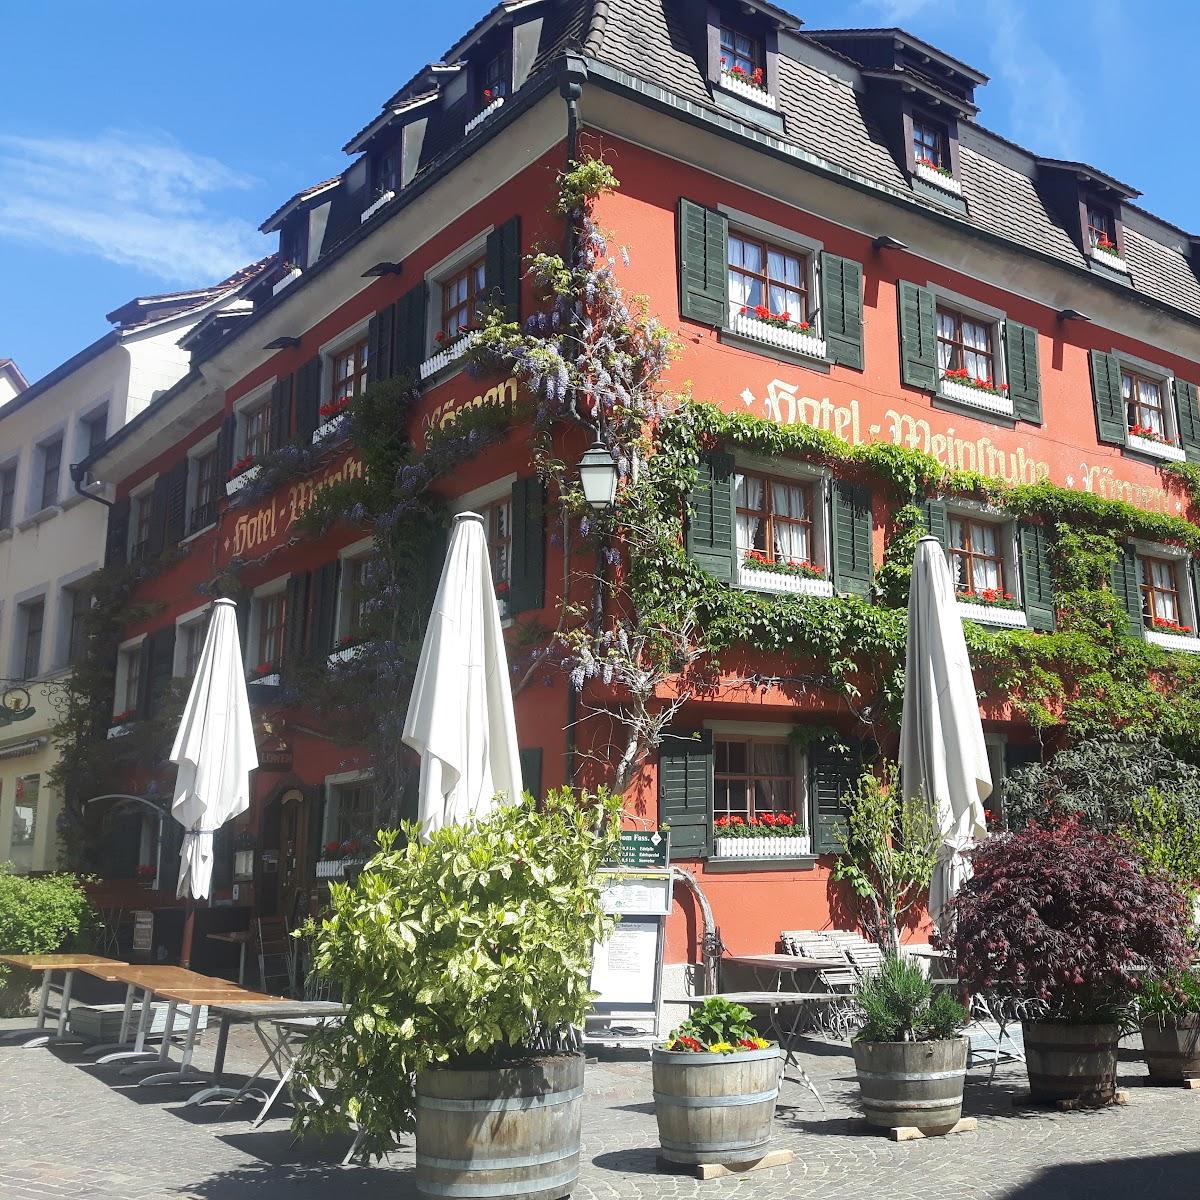 Restaurant "Hotel Weinstube Löwen" in Meersburg